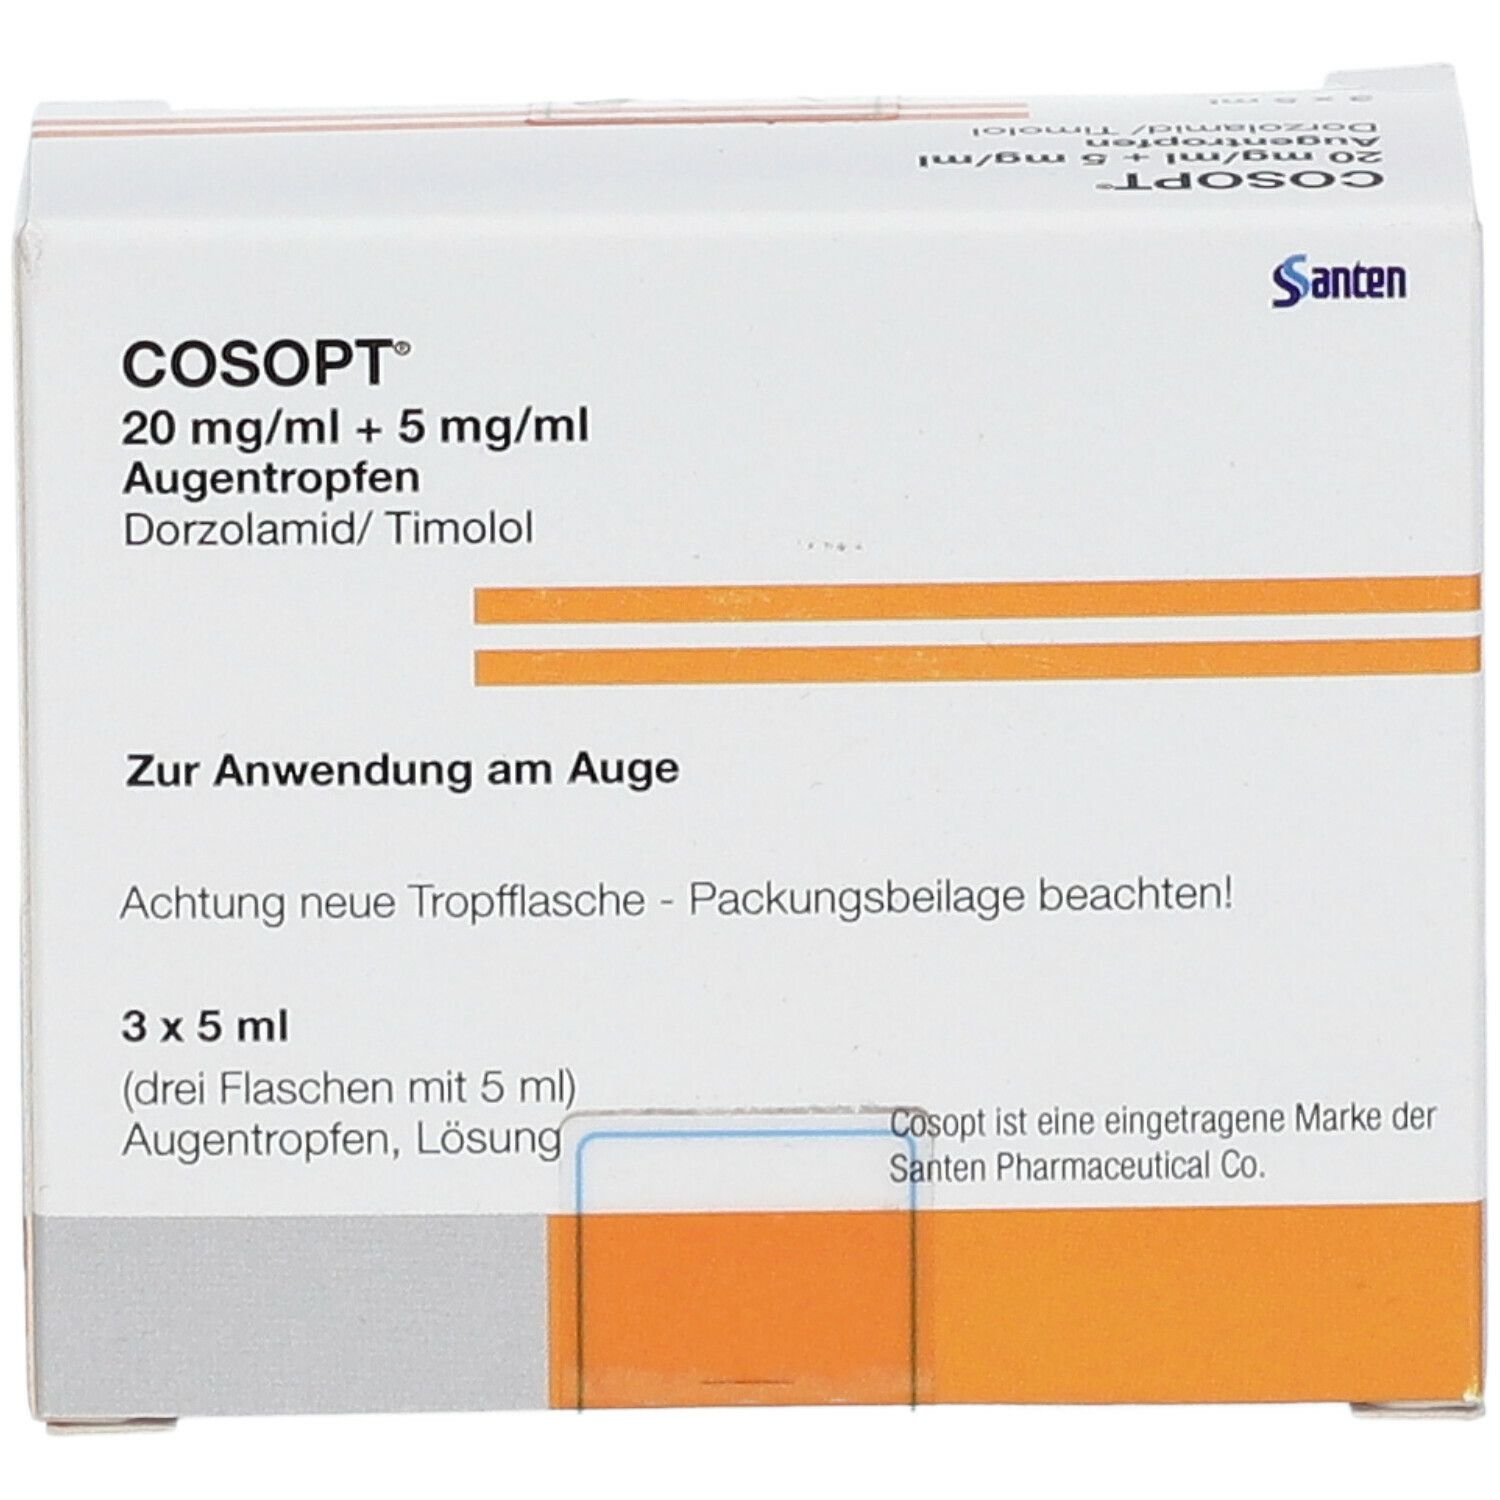 Cosopt 20 mg/ml + 5 mg/ml